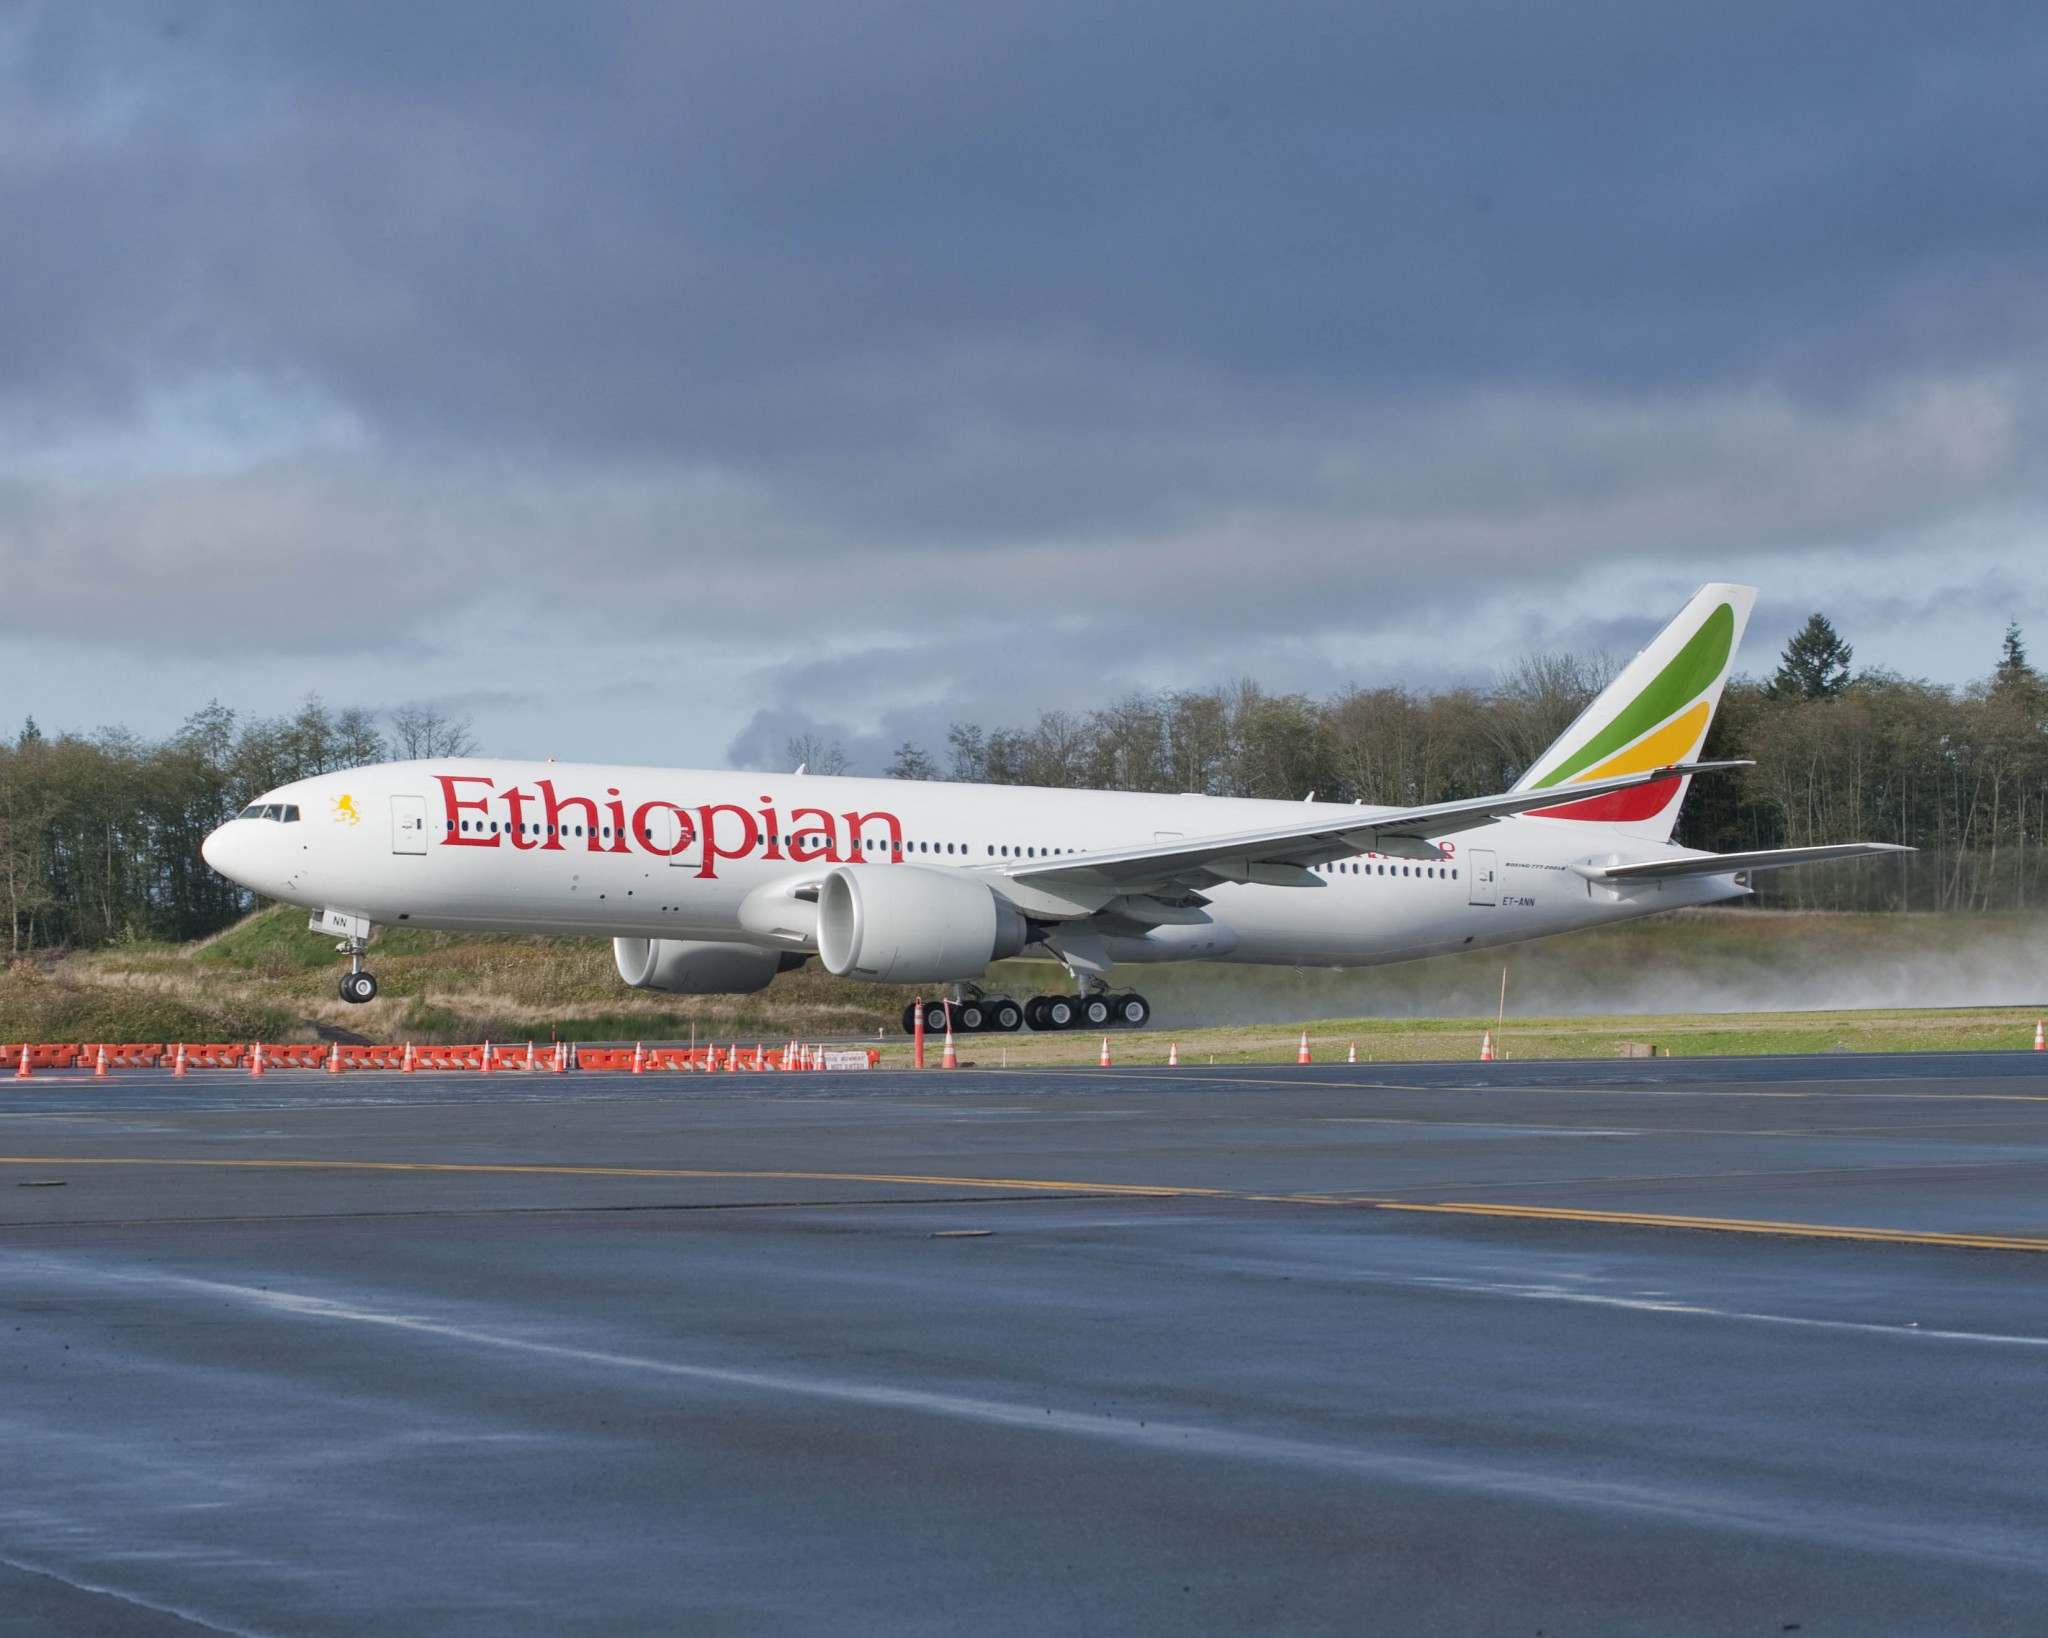 Ethiopian celebrates 50 years of service in UK